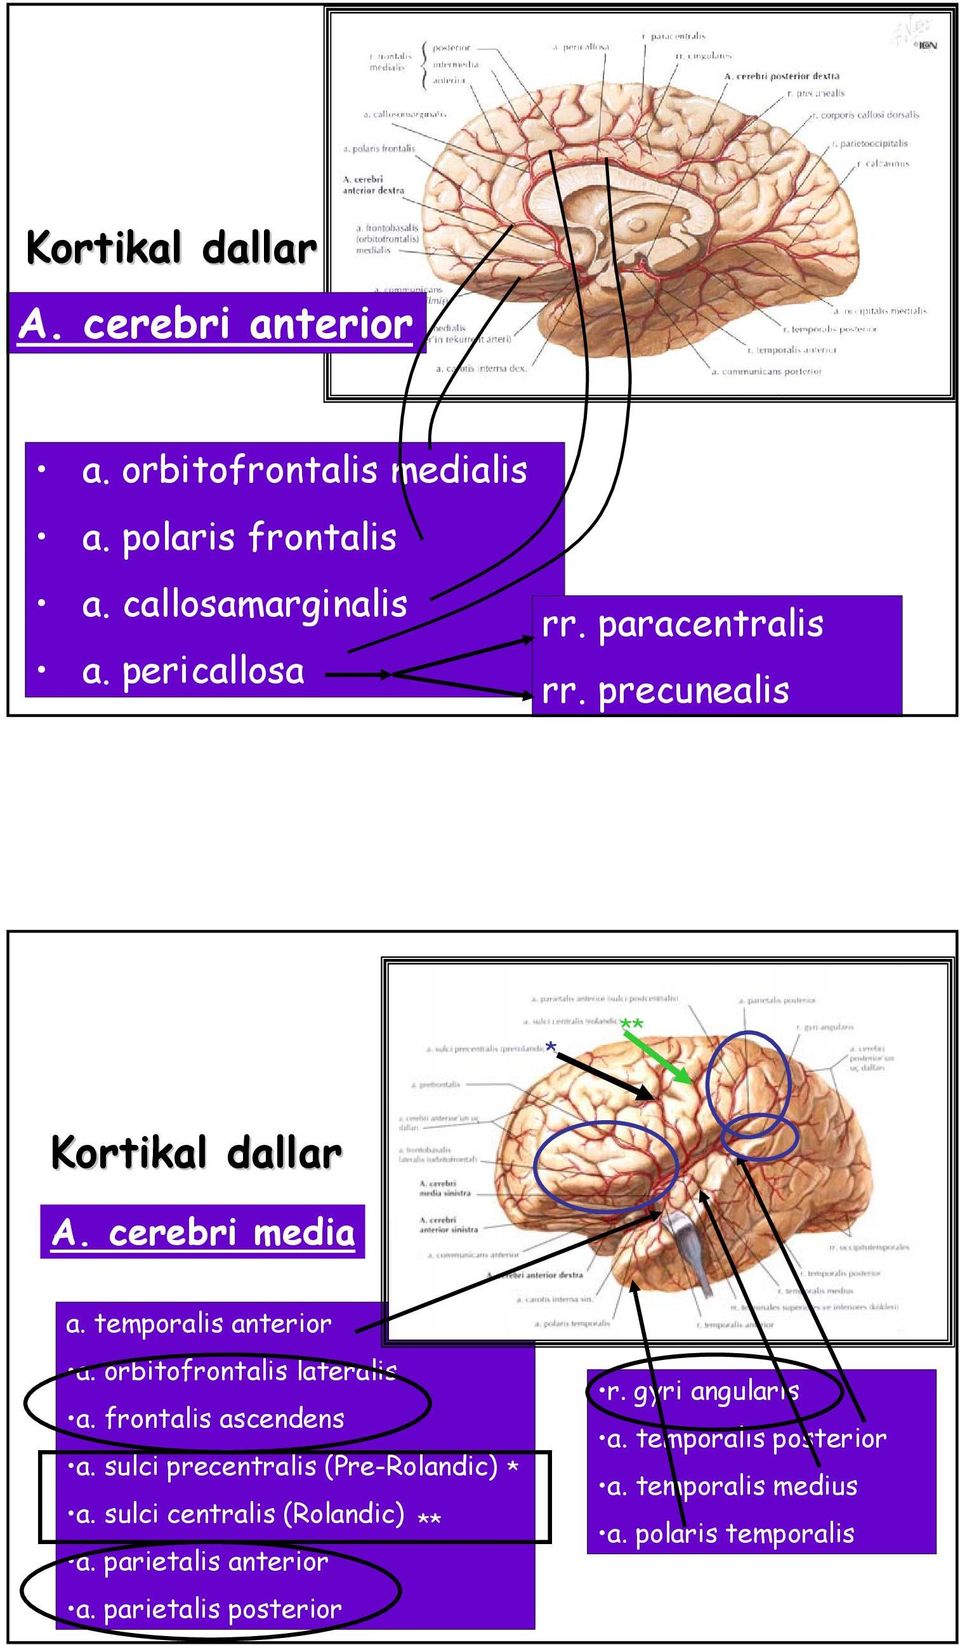 orbitofrontalis lateralis òa. frontalis ascendens òa. sulci precentralis (Pre-Rolandic) * òa.